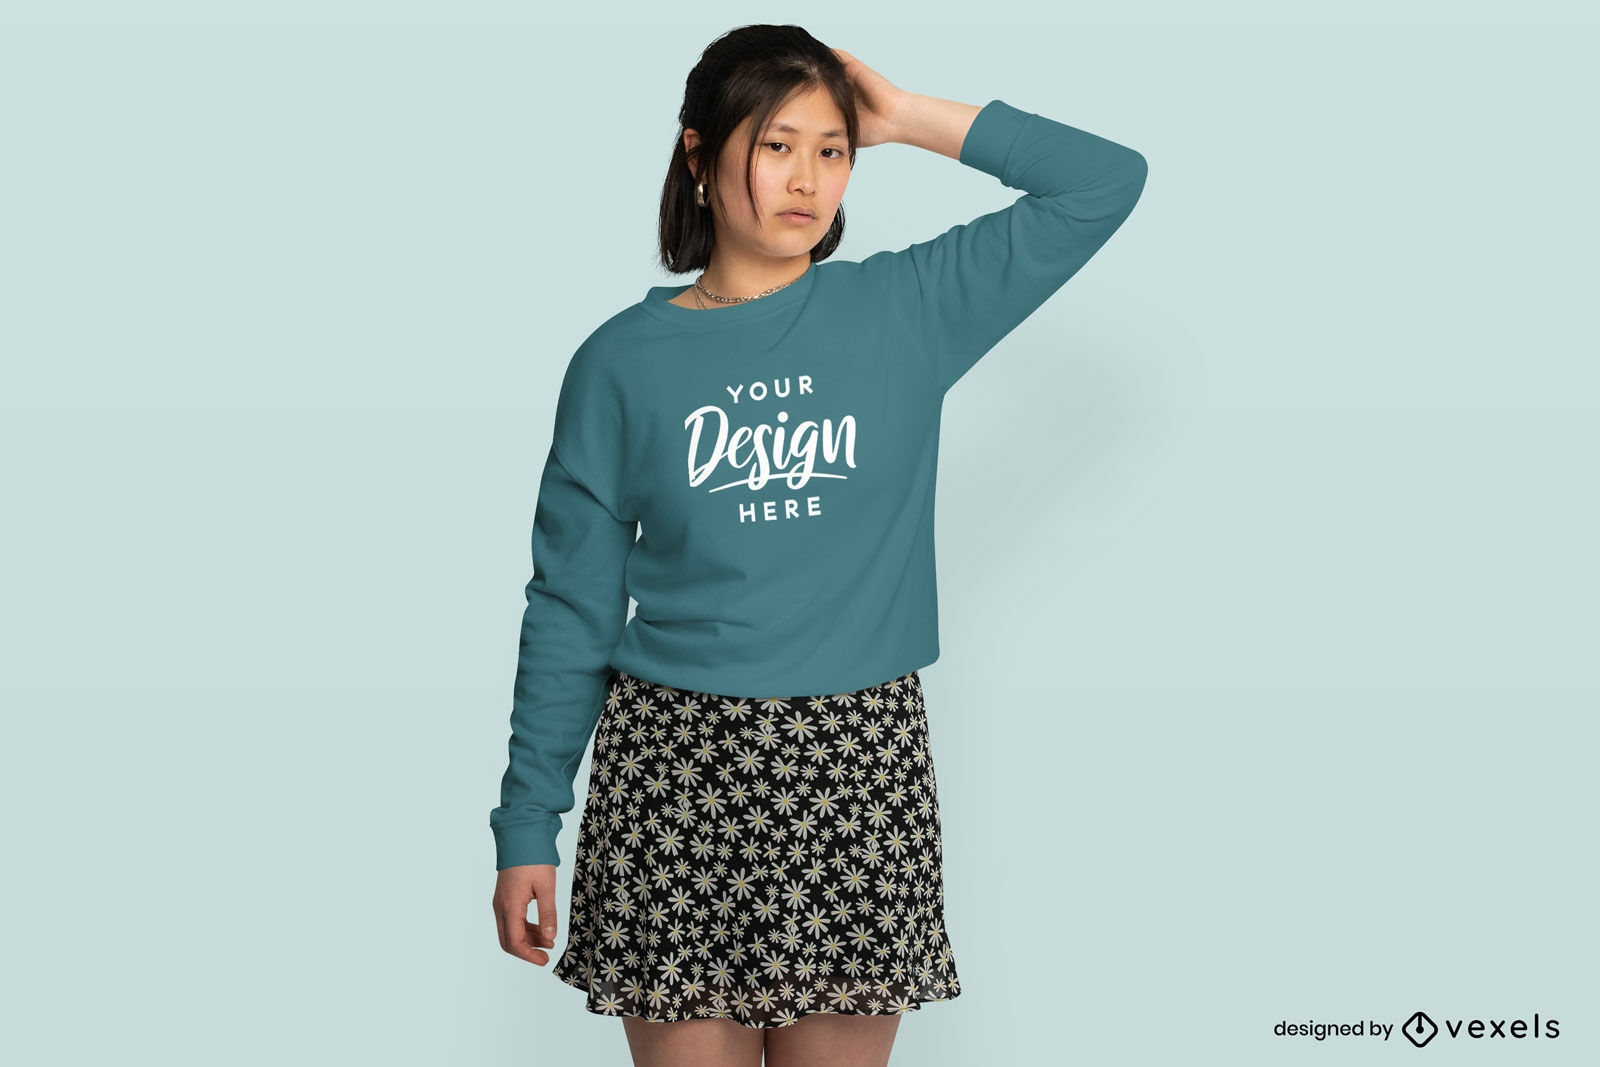 Asian girl in skirt and sweatshirt mockup